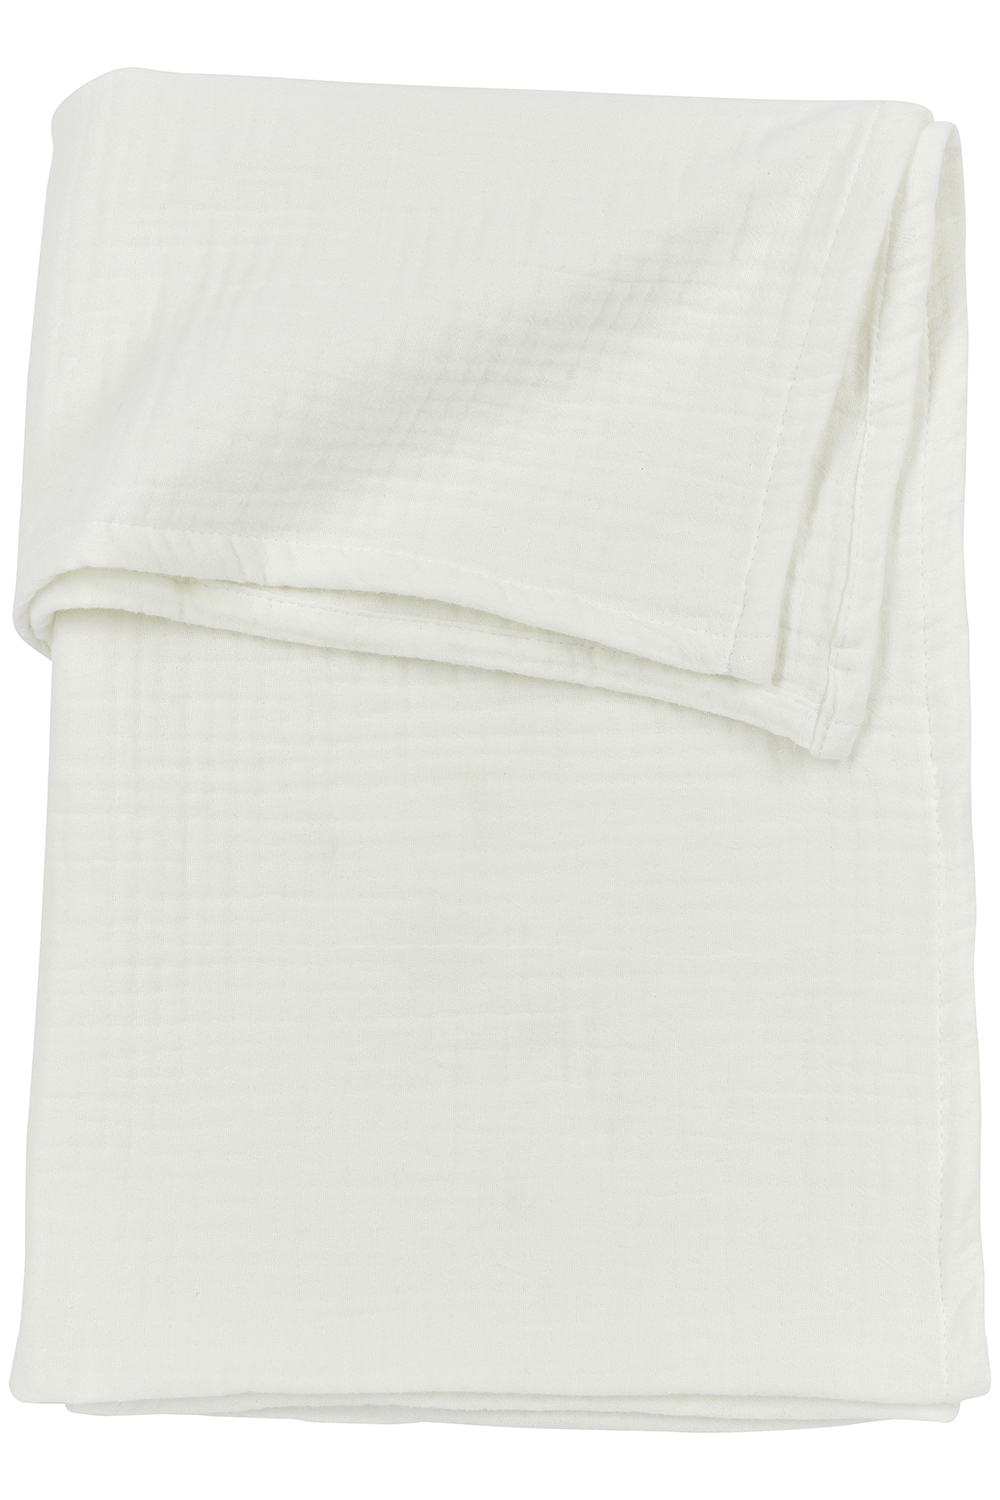 Cot bed sheet muslin Uni - offwhite - 100x150cm